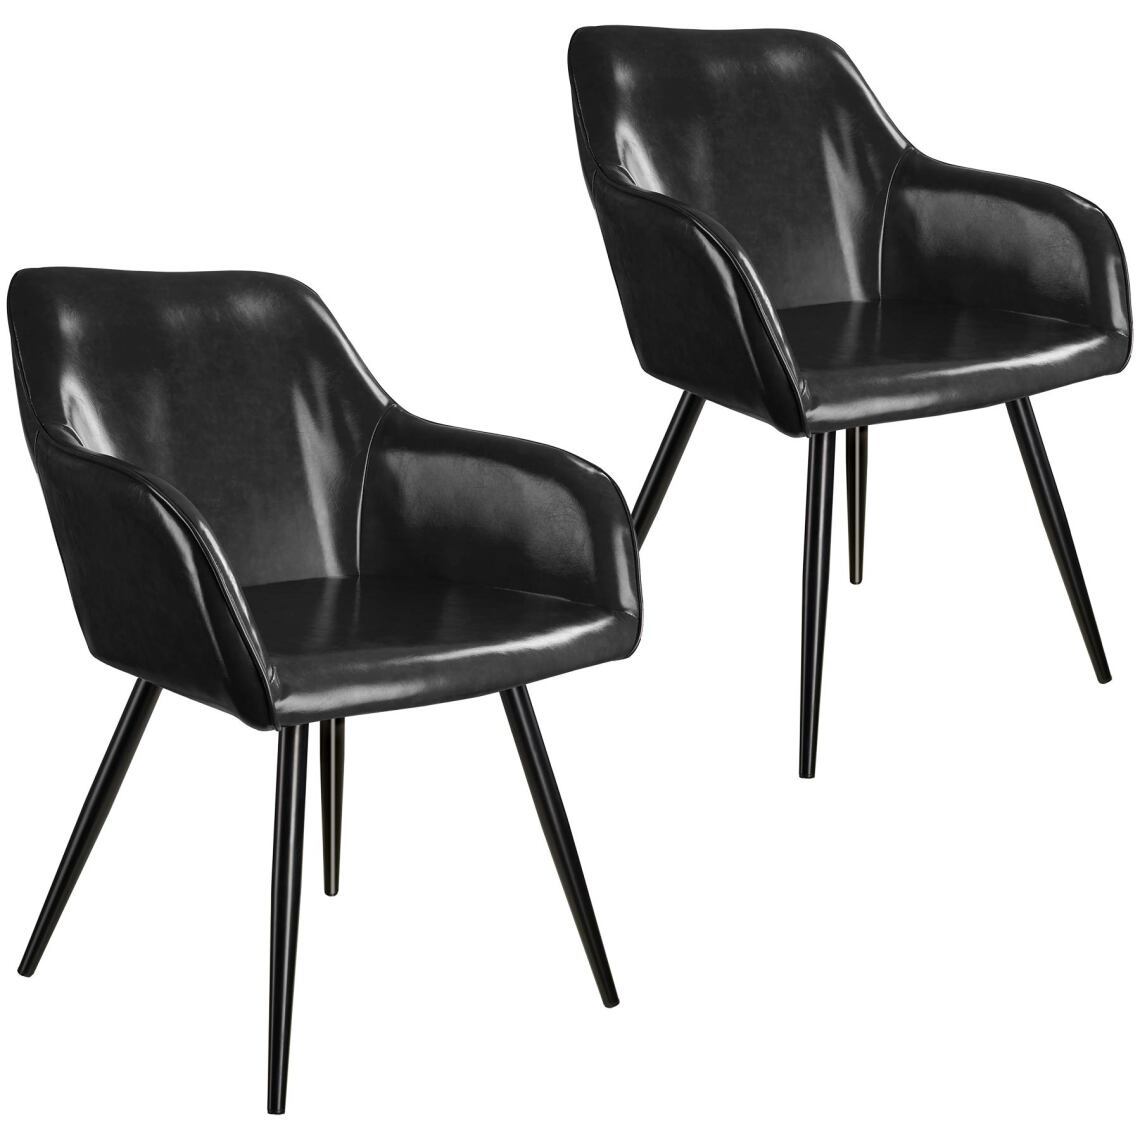 Tectake - 2 Chaises Marilyn en cuir synthétique - noir - Chaises